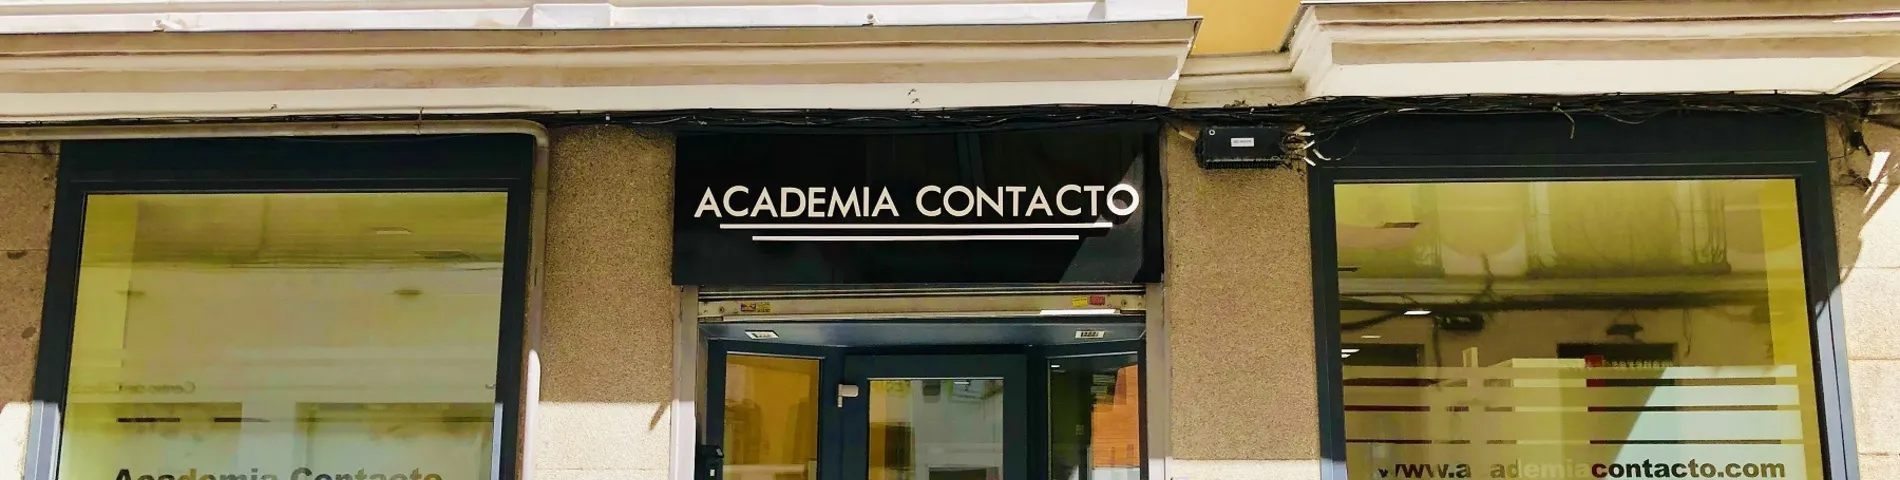 Academia Contacto зображення 1